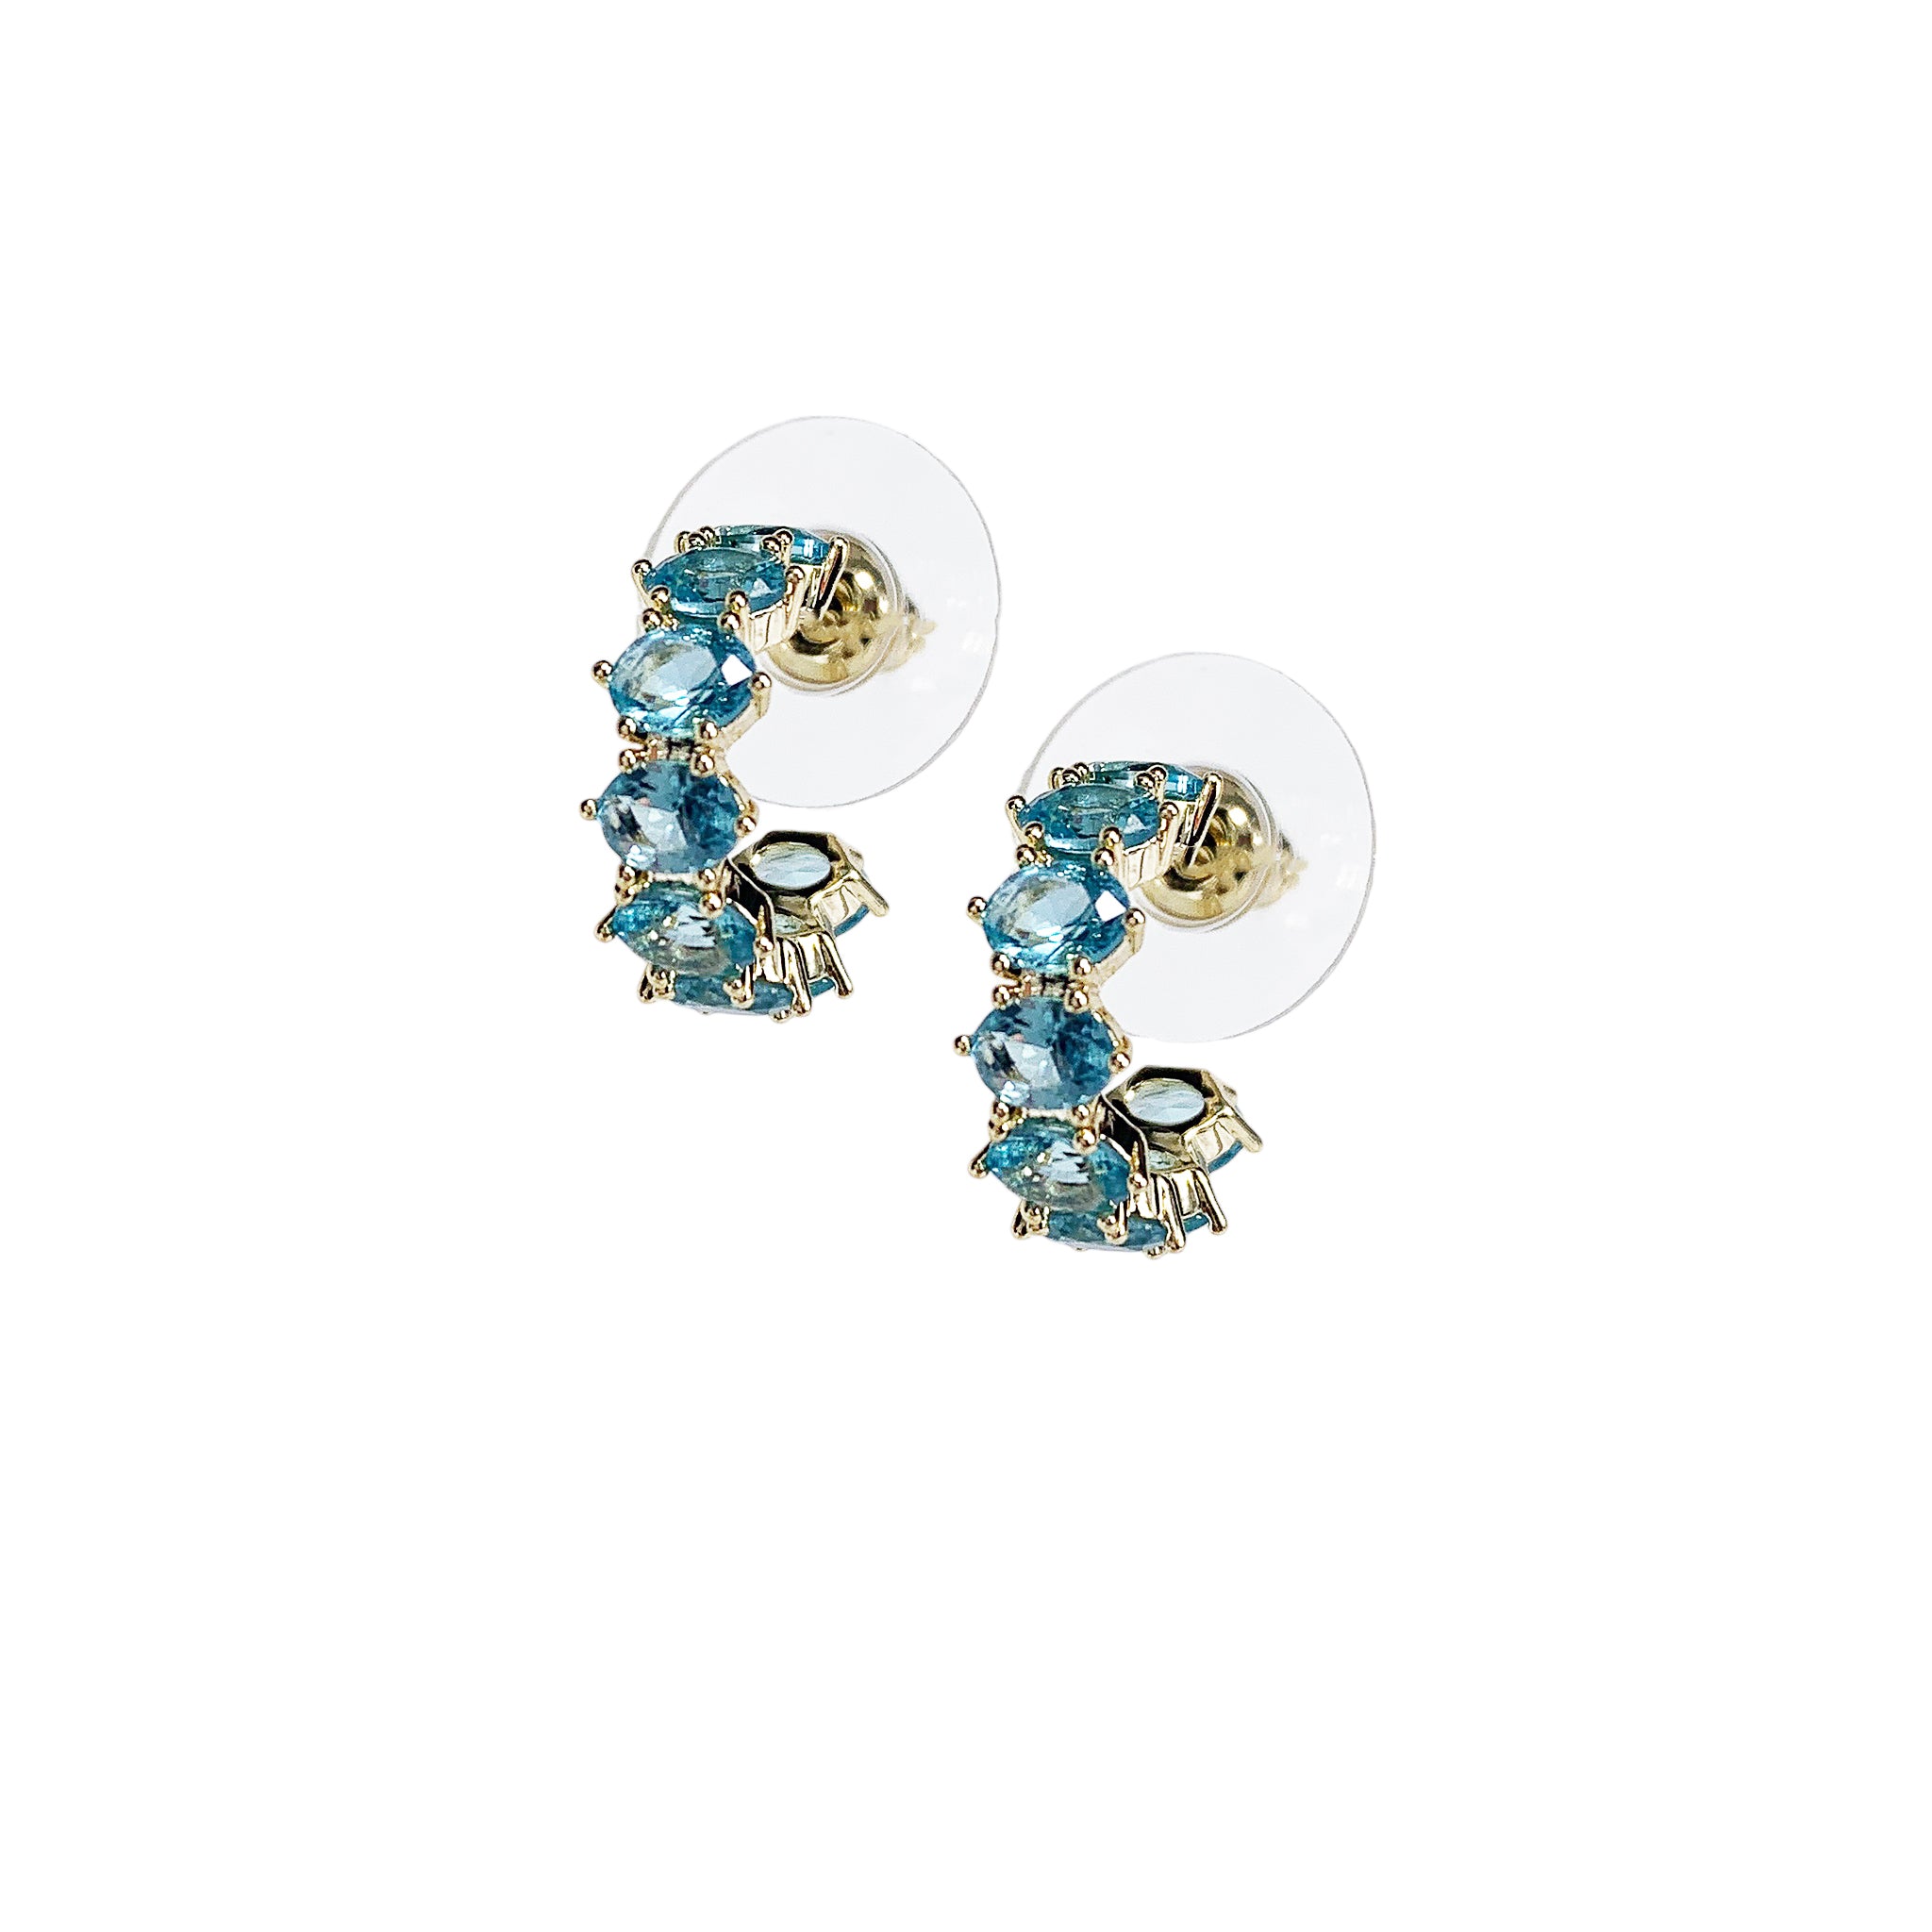 Kendra Scott Cailin Huggie Hoop Earrings in Aqua Crystal and Gold Plated